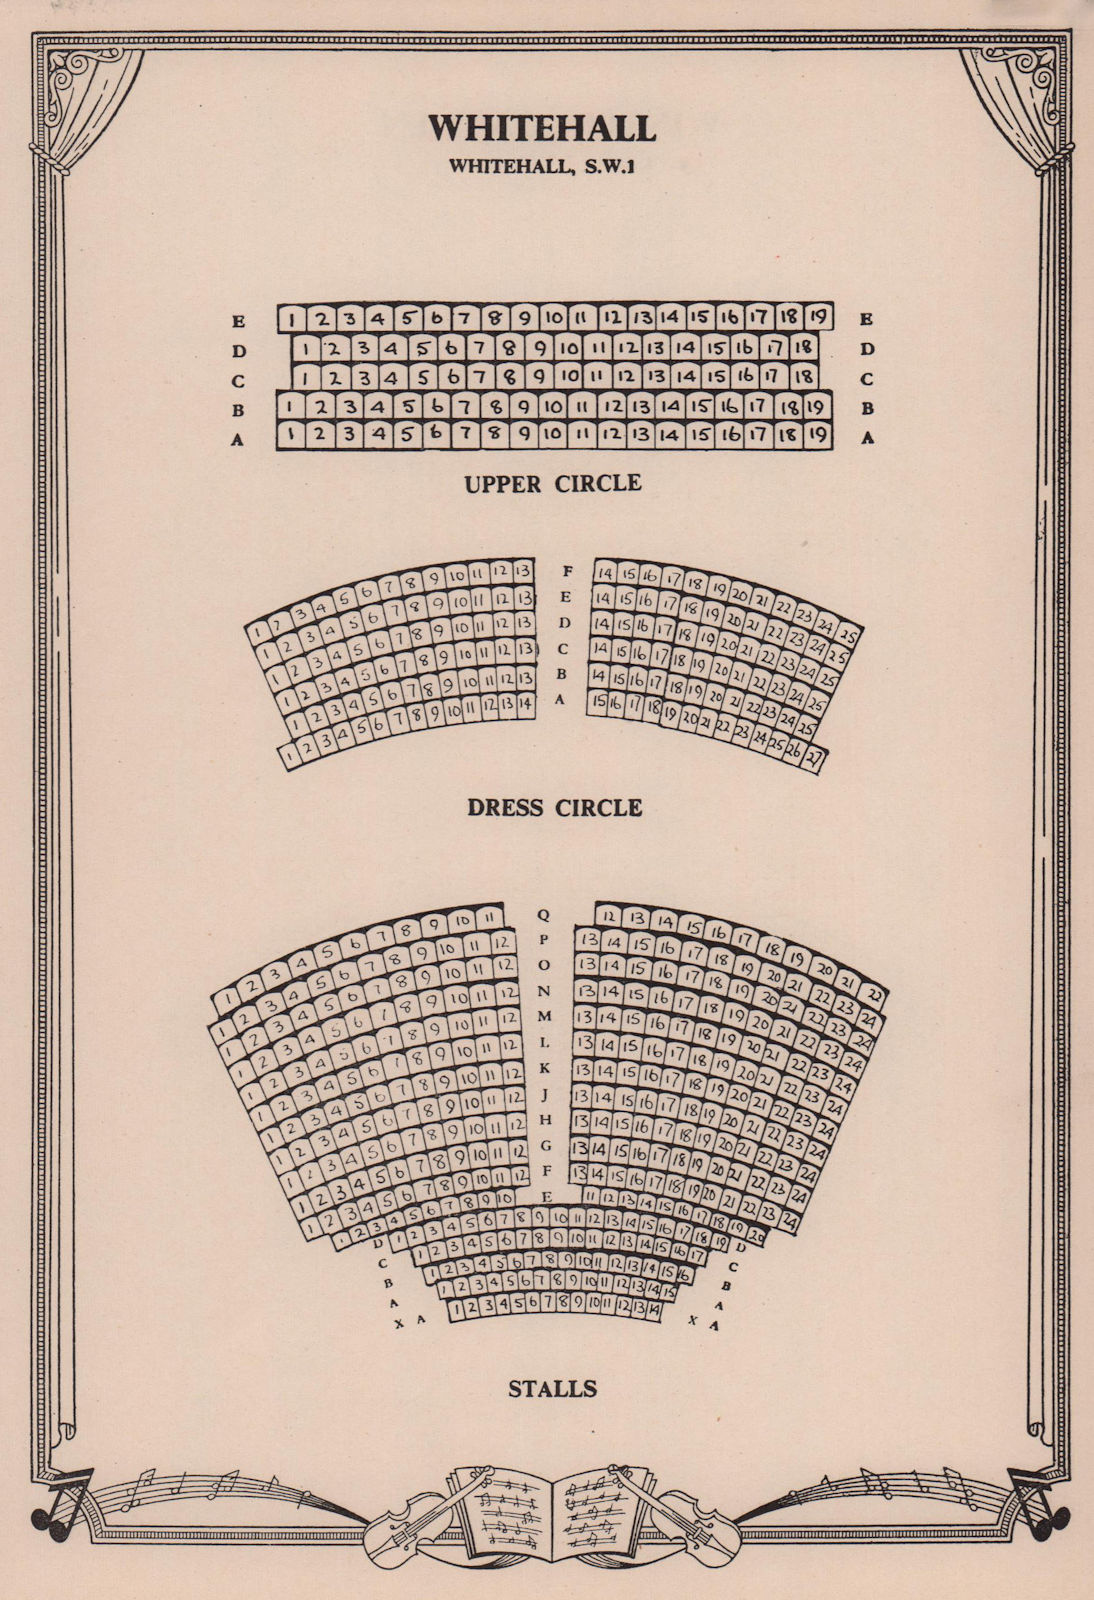 Associate Product Whitehall Theatre (Trafalgar Studios), Tra. Square. Vintage seating plan 1955